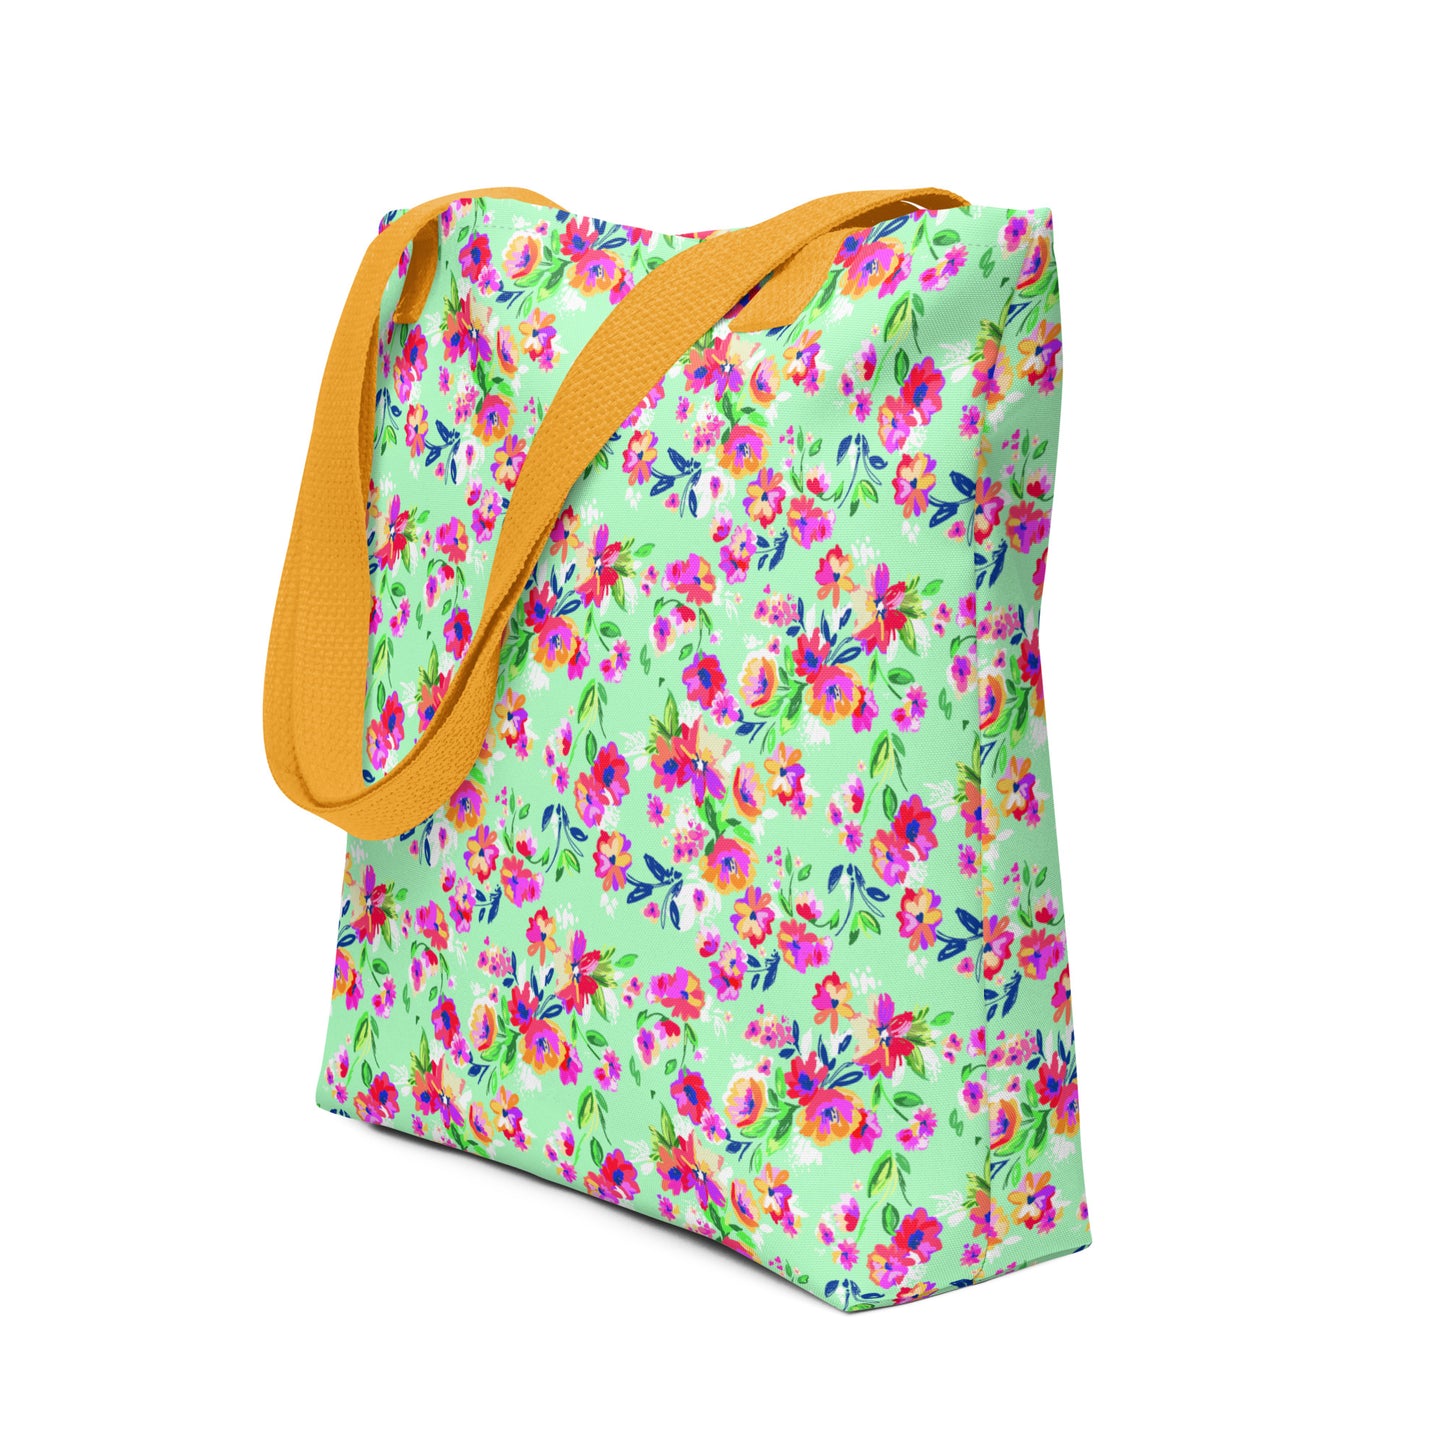 Fiorellini - Shopping Bag